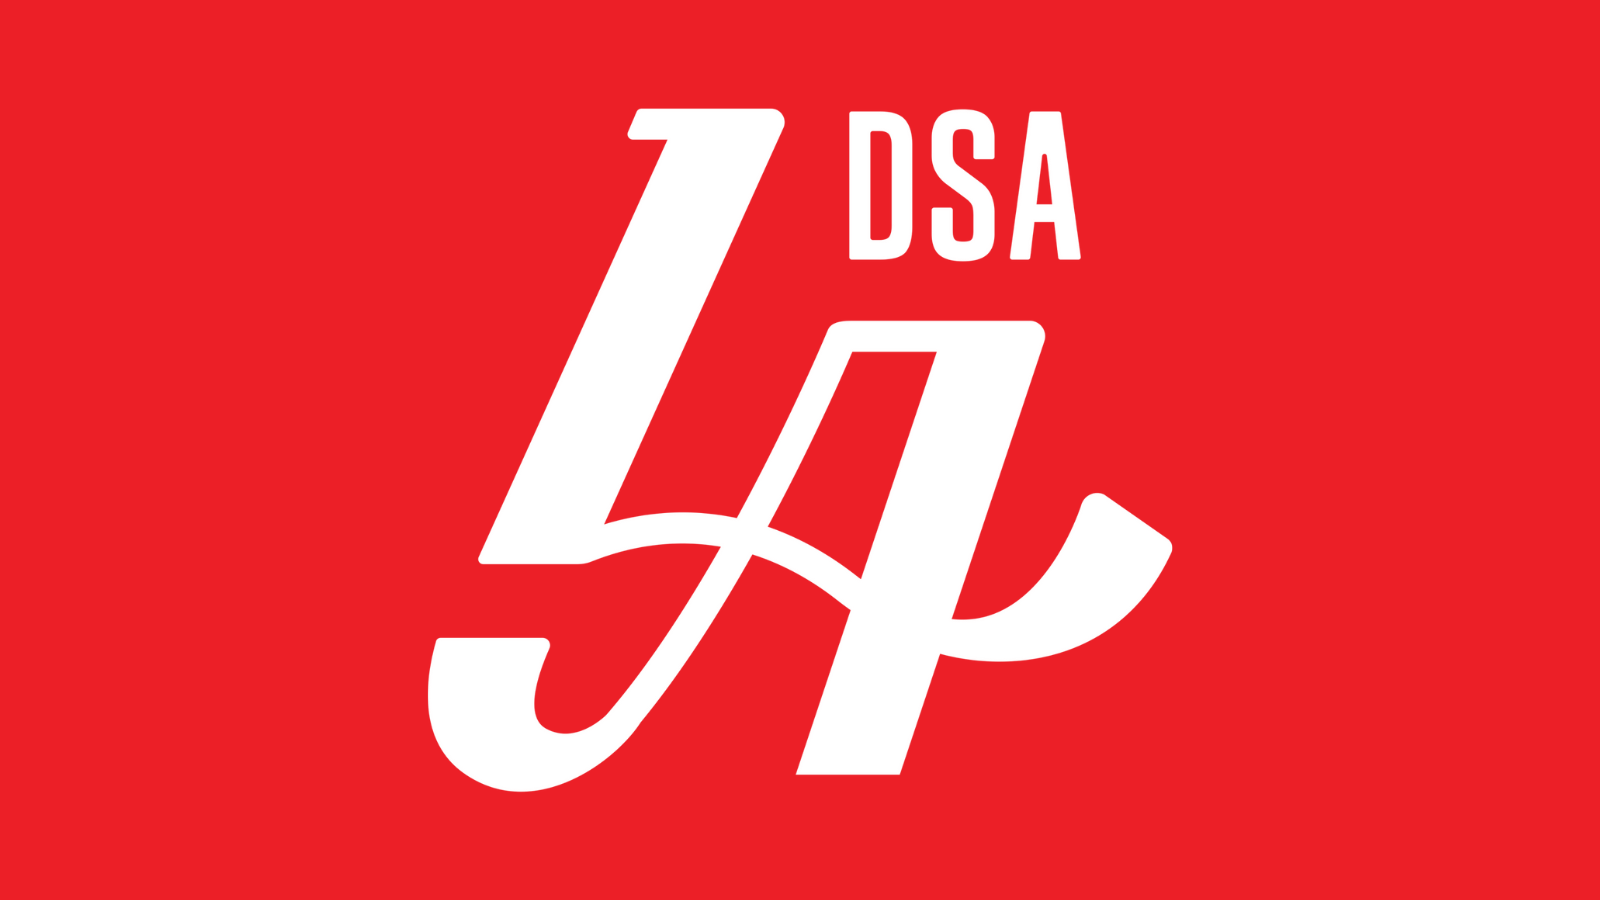 DSA LA logo on red background